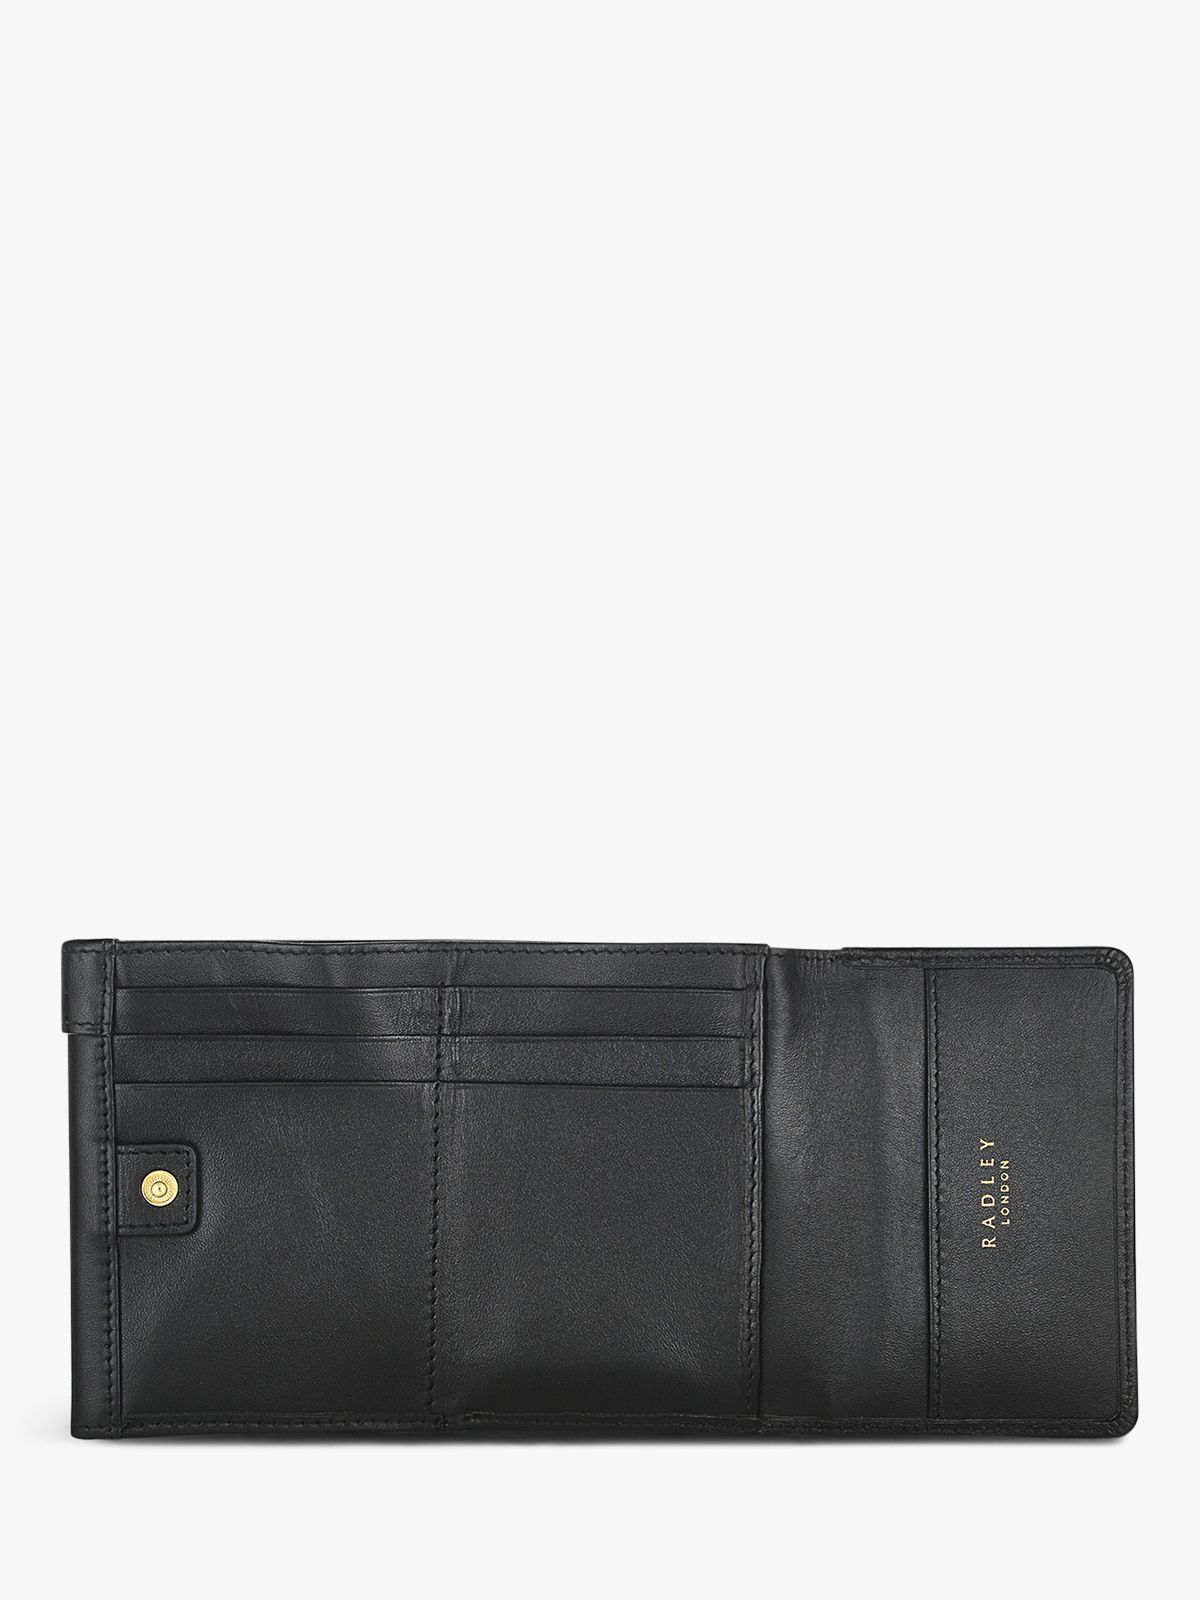 Radley London Pockets Leather Tri-Fold Purse, Black